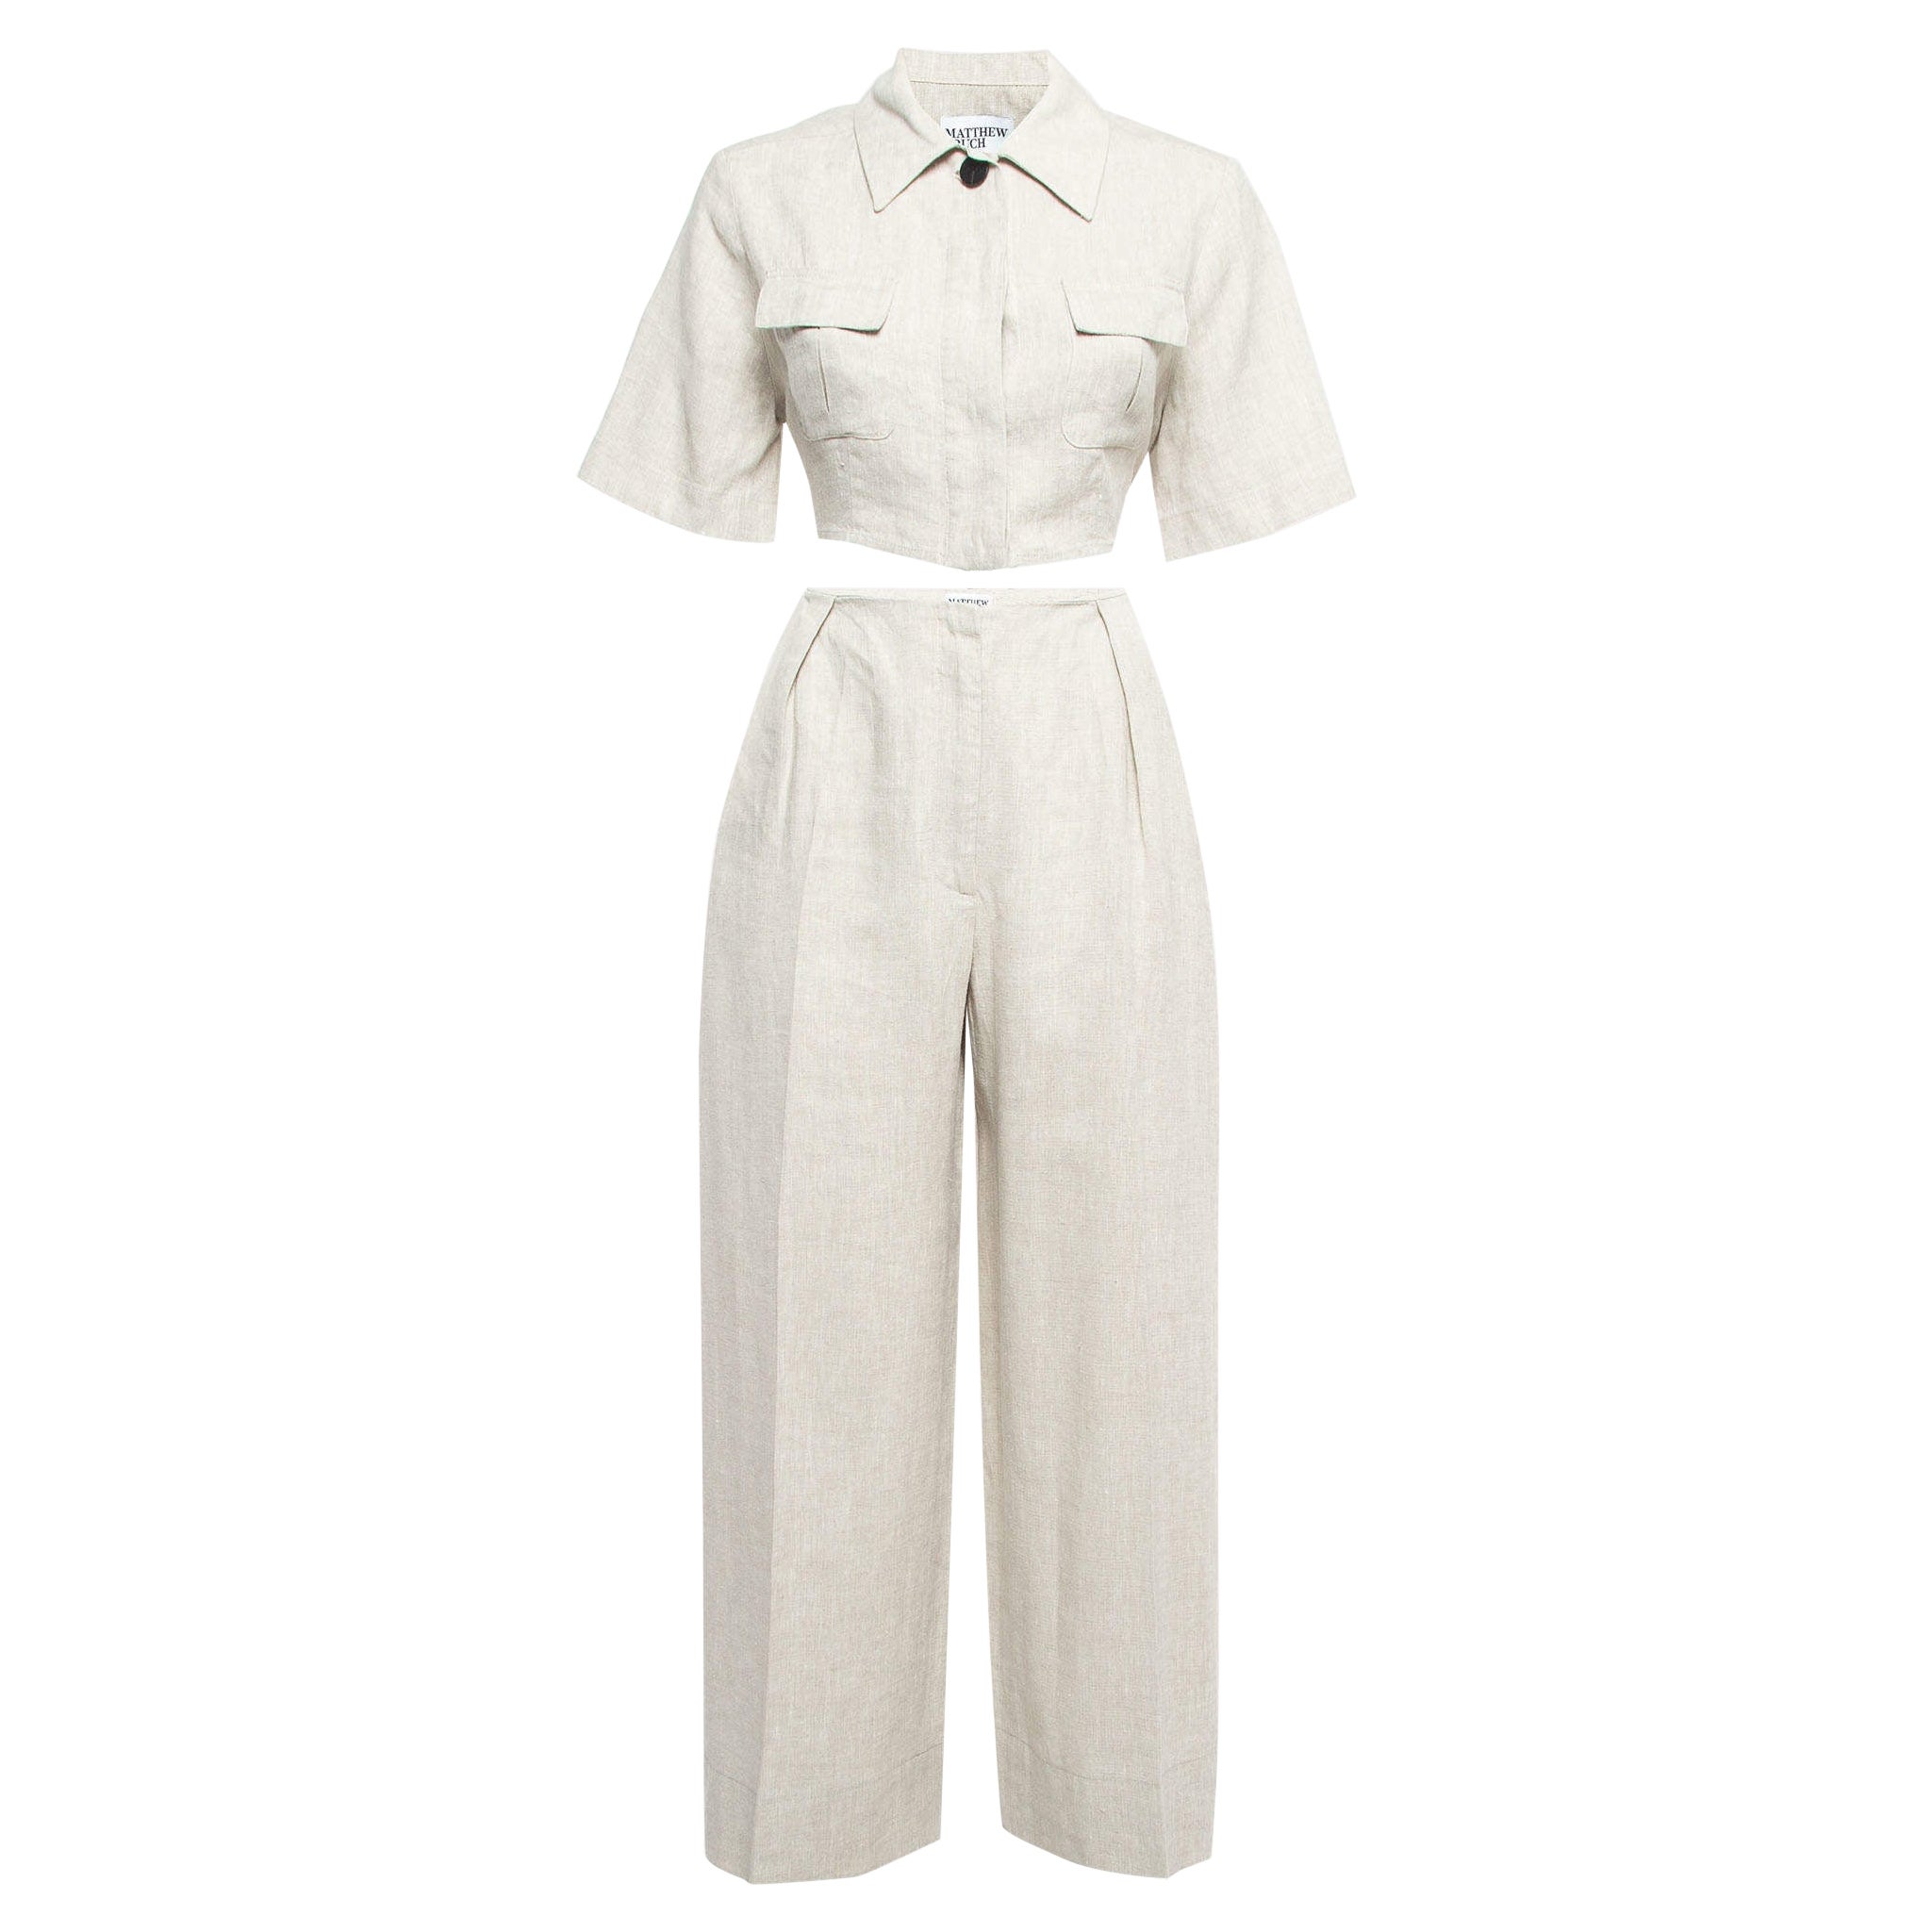 Matthew Bruch Light Grey Linen Top & Pants Set S For Sale